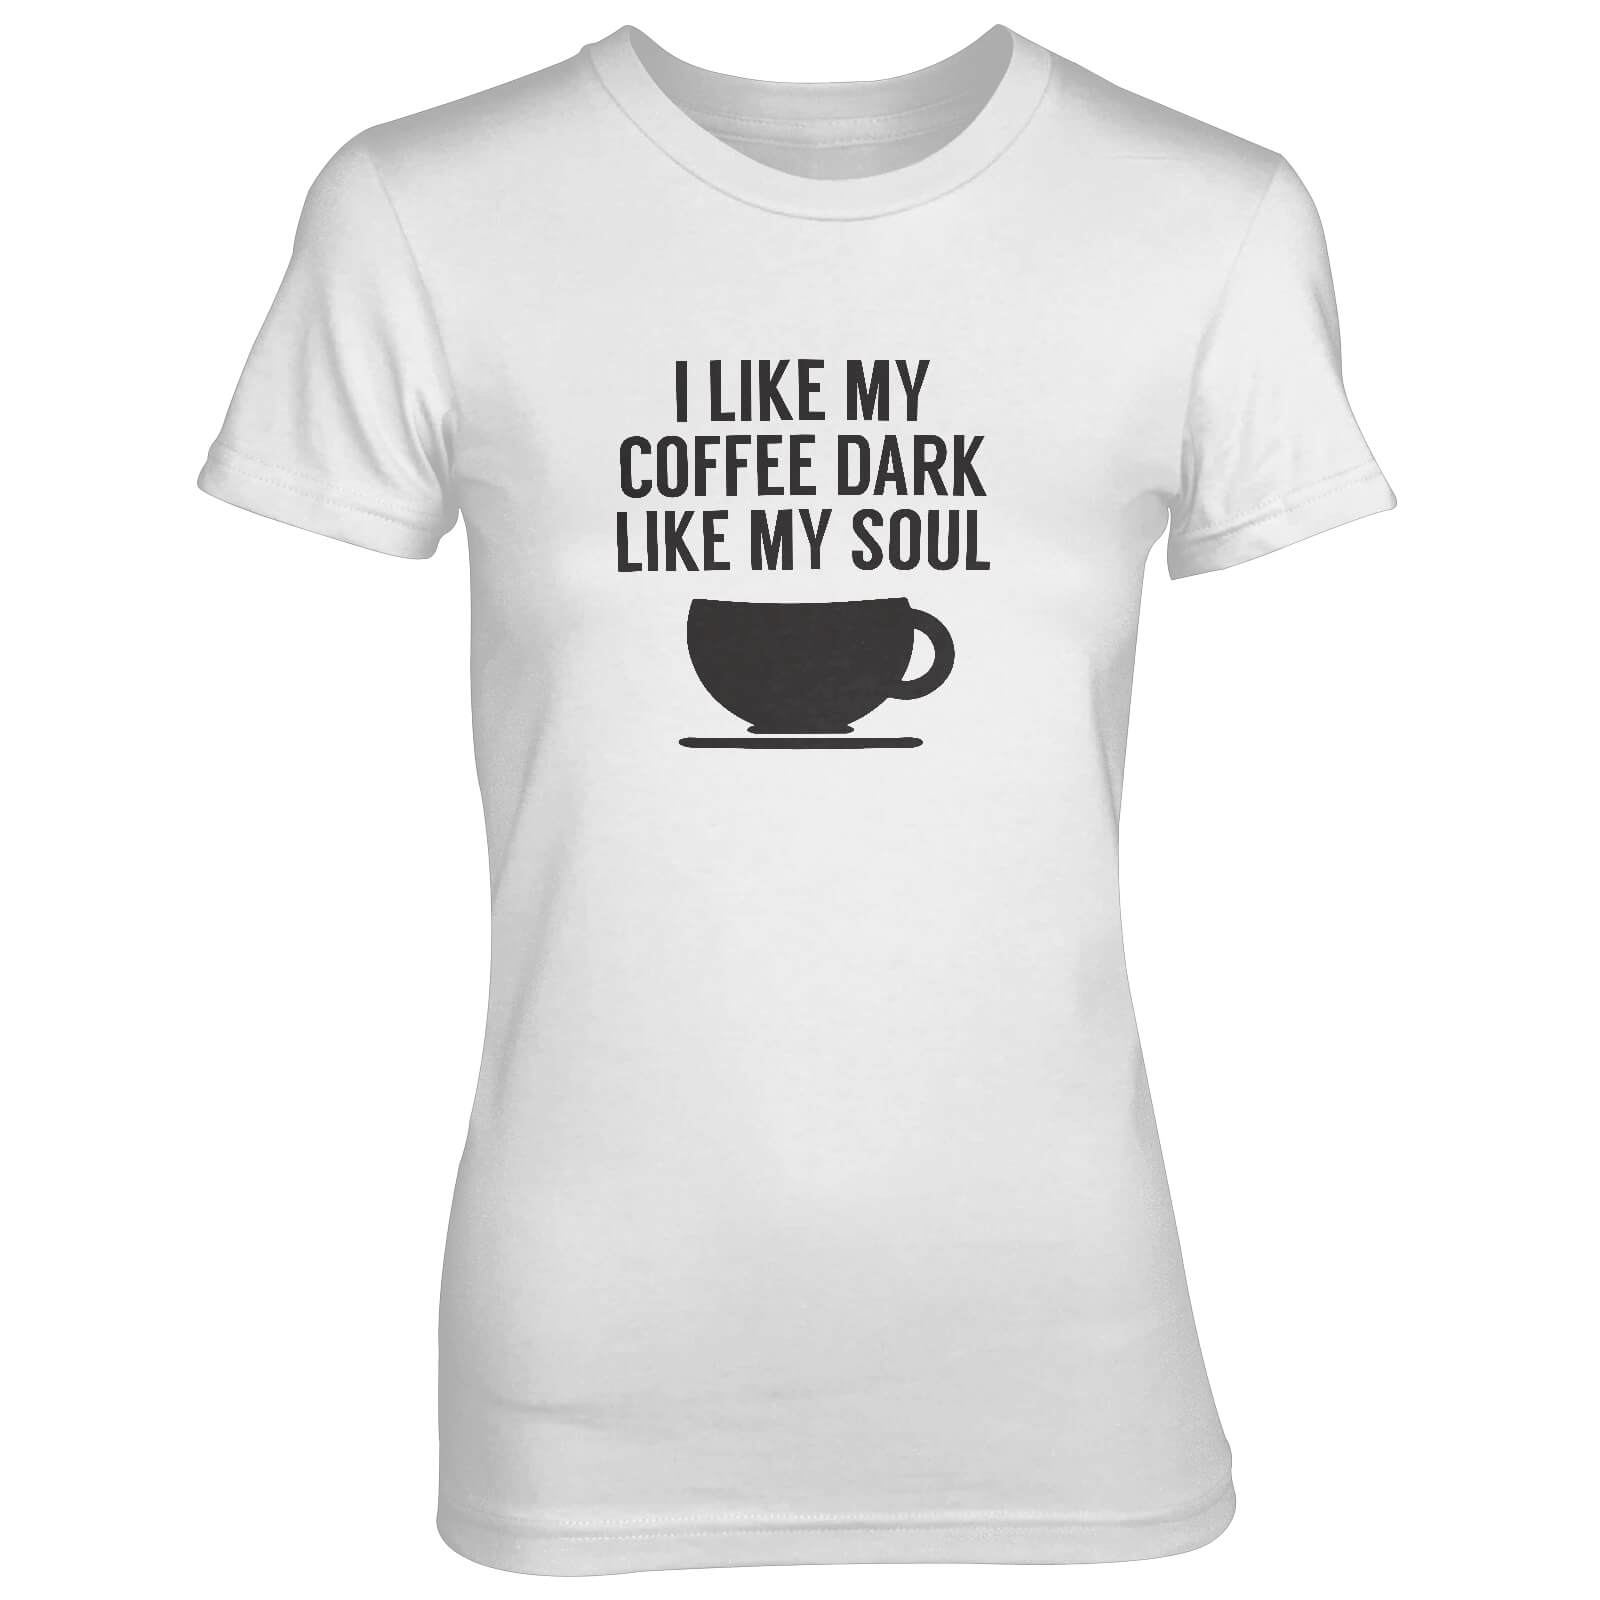 I Like My Coffee Dark Like My Soul Women's White T-Shirt - S - White